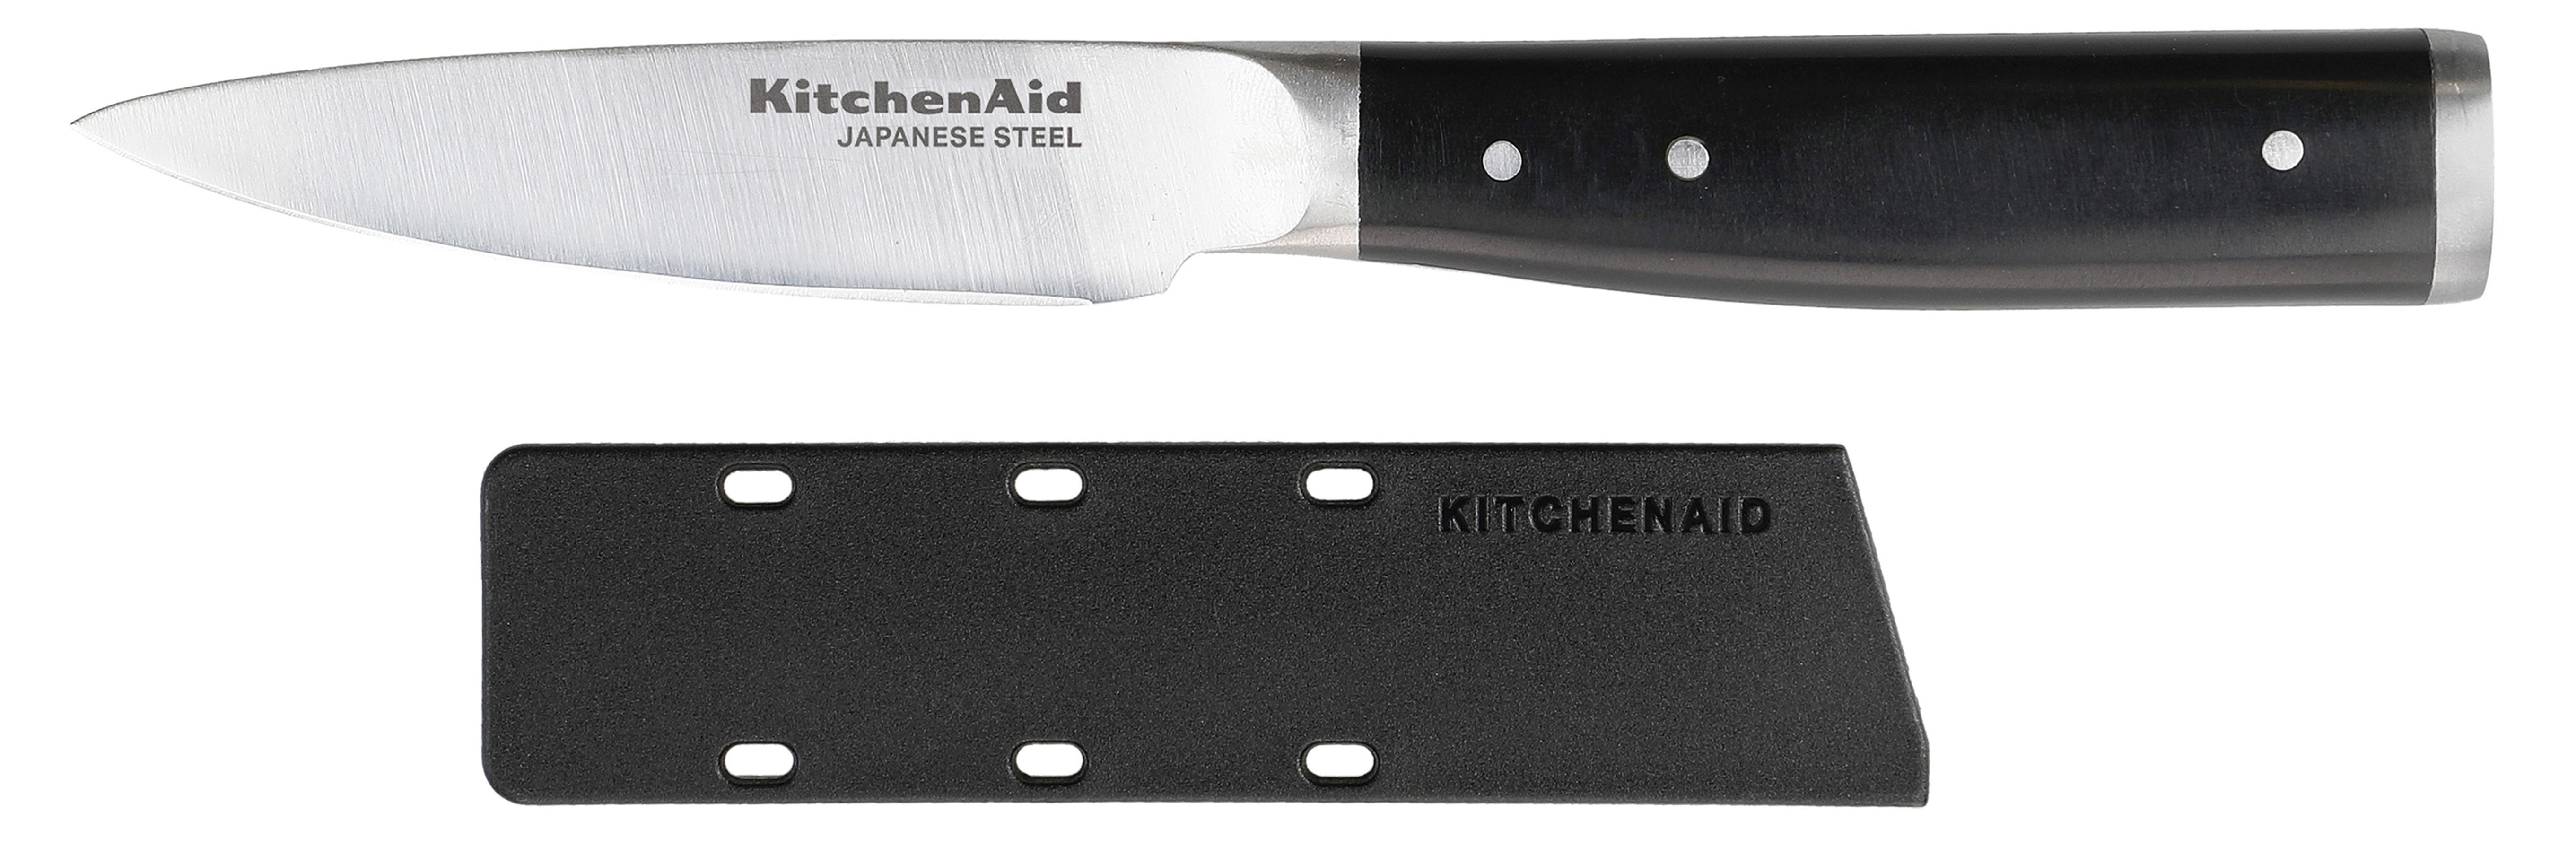 KitchenAid 12-piece Japanese steel knife block set , White